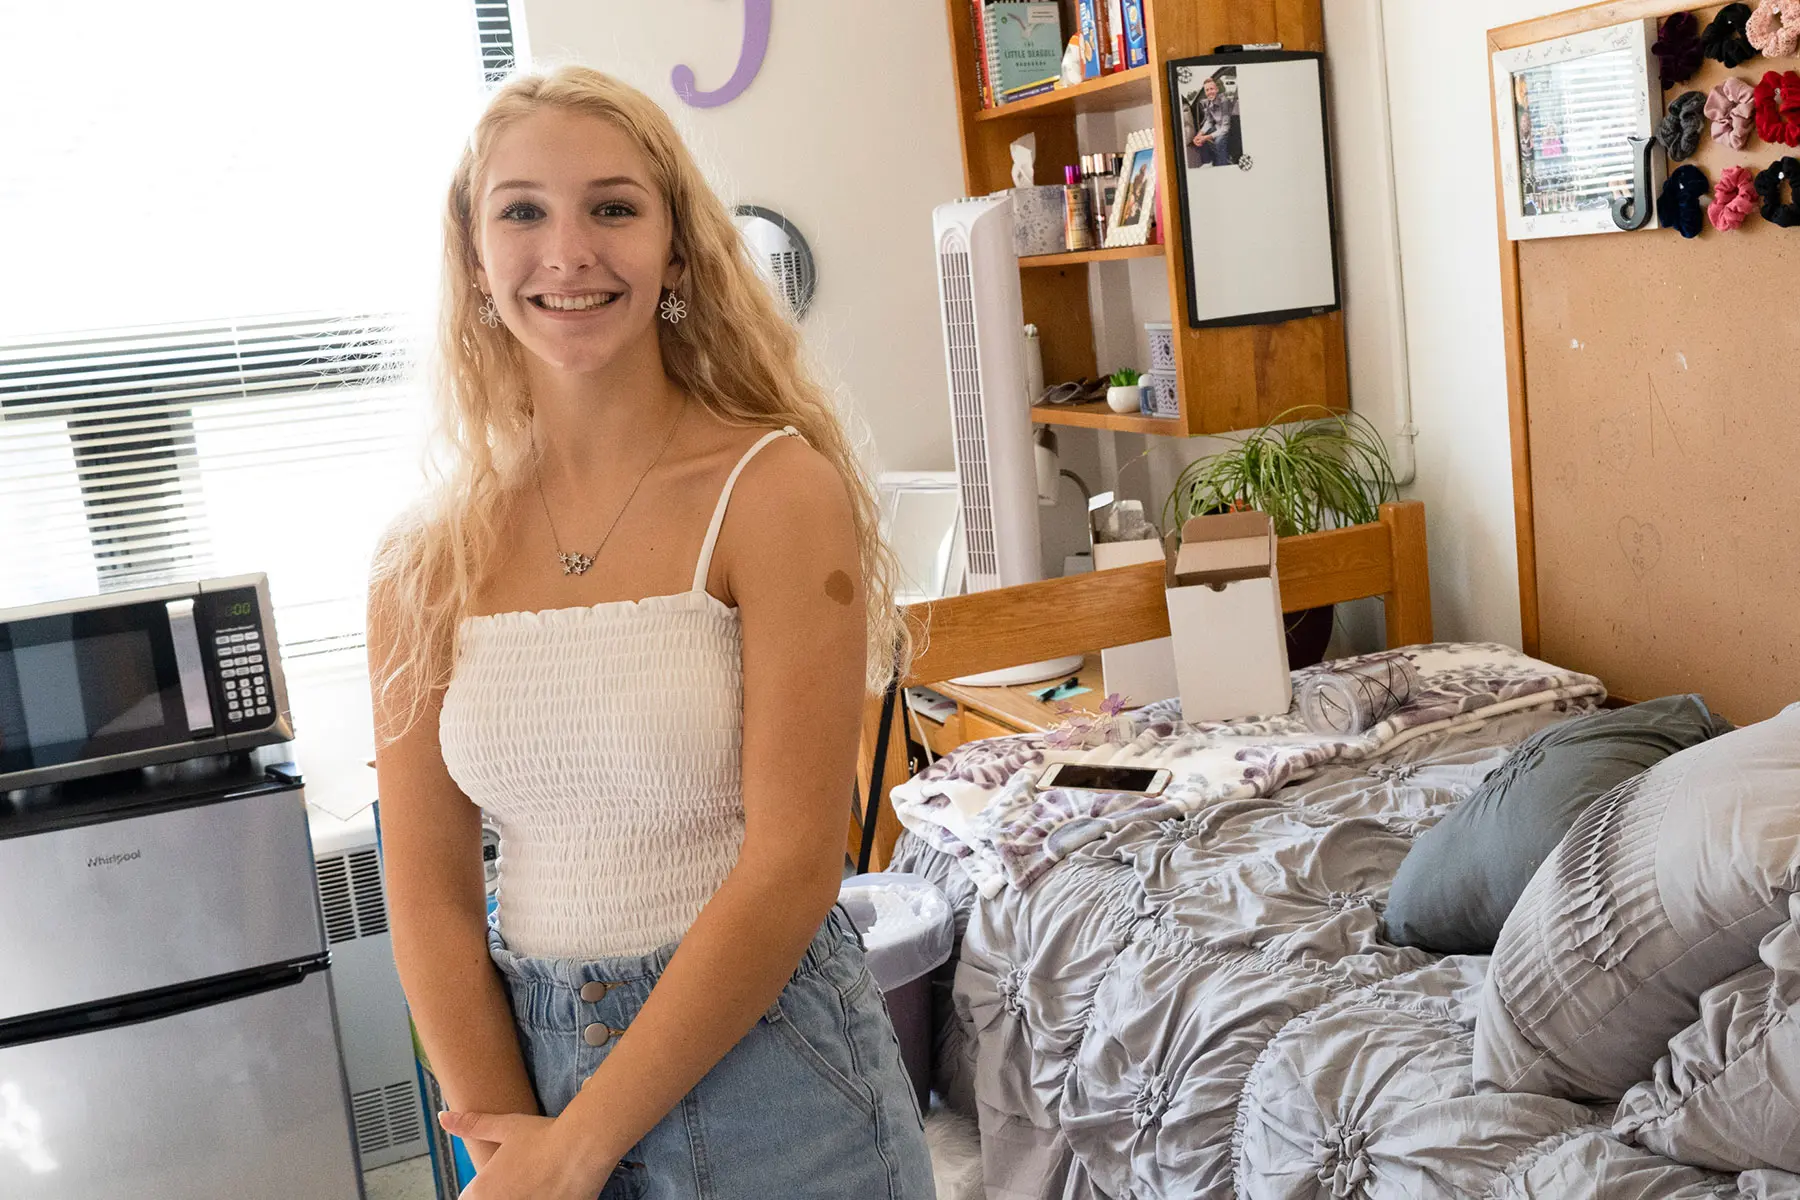 Student smiling in dorm room.